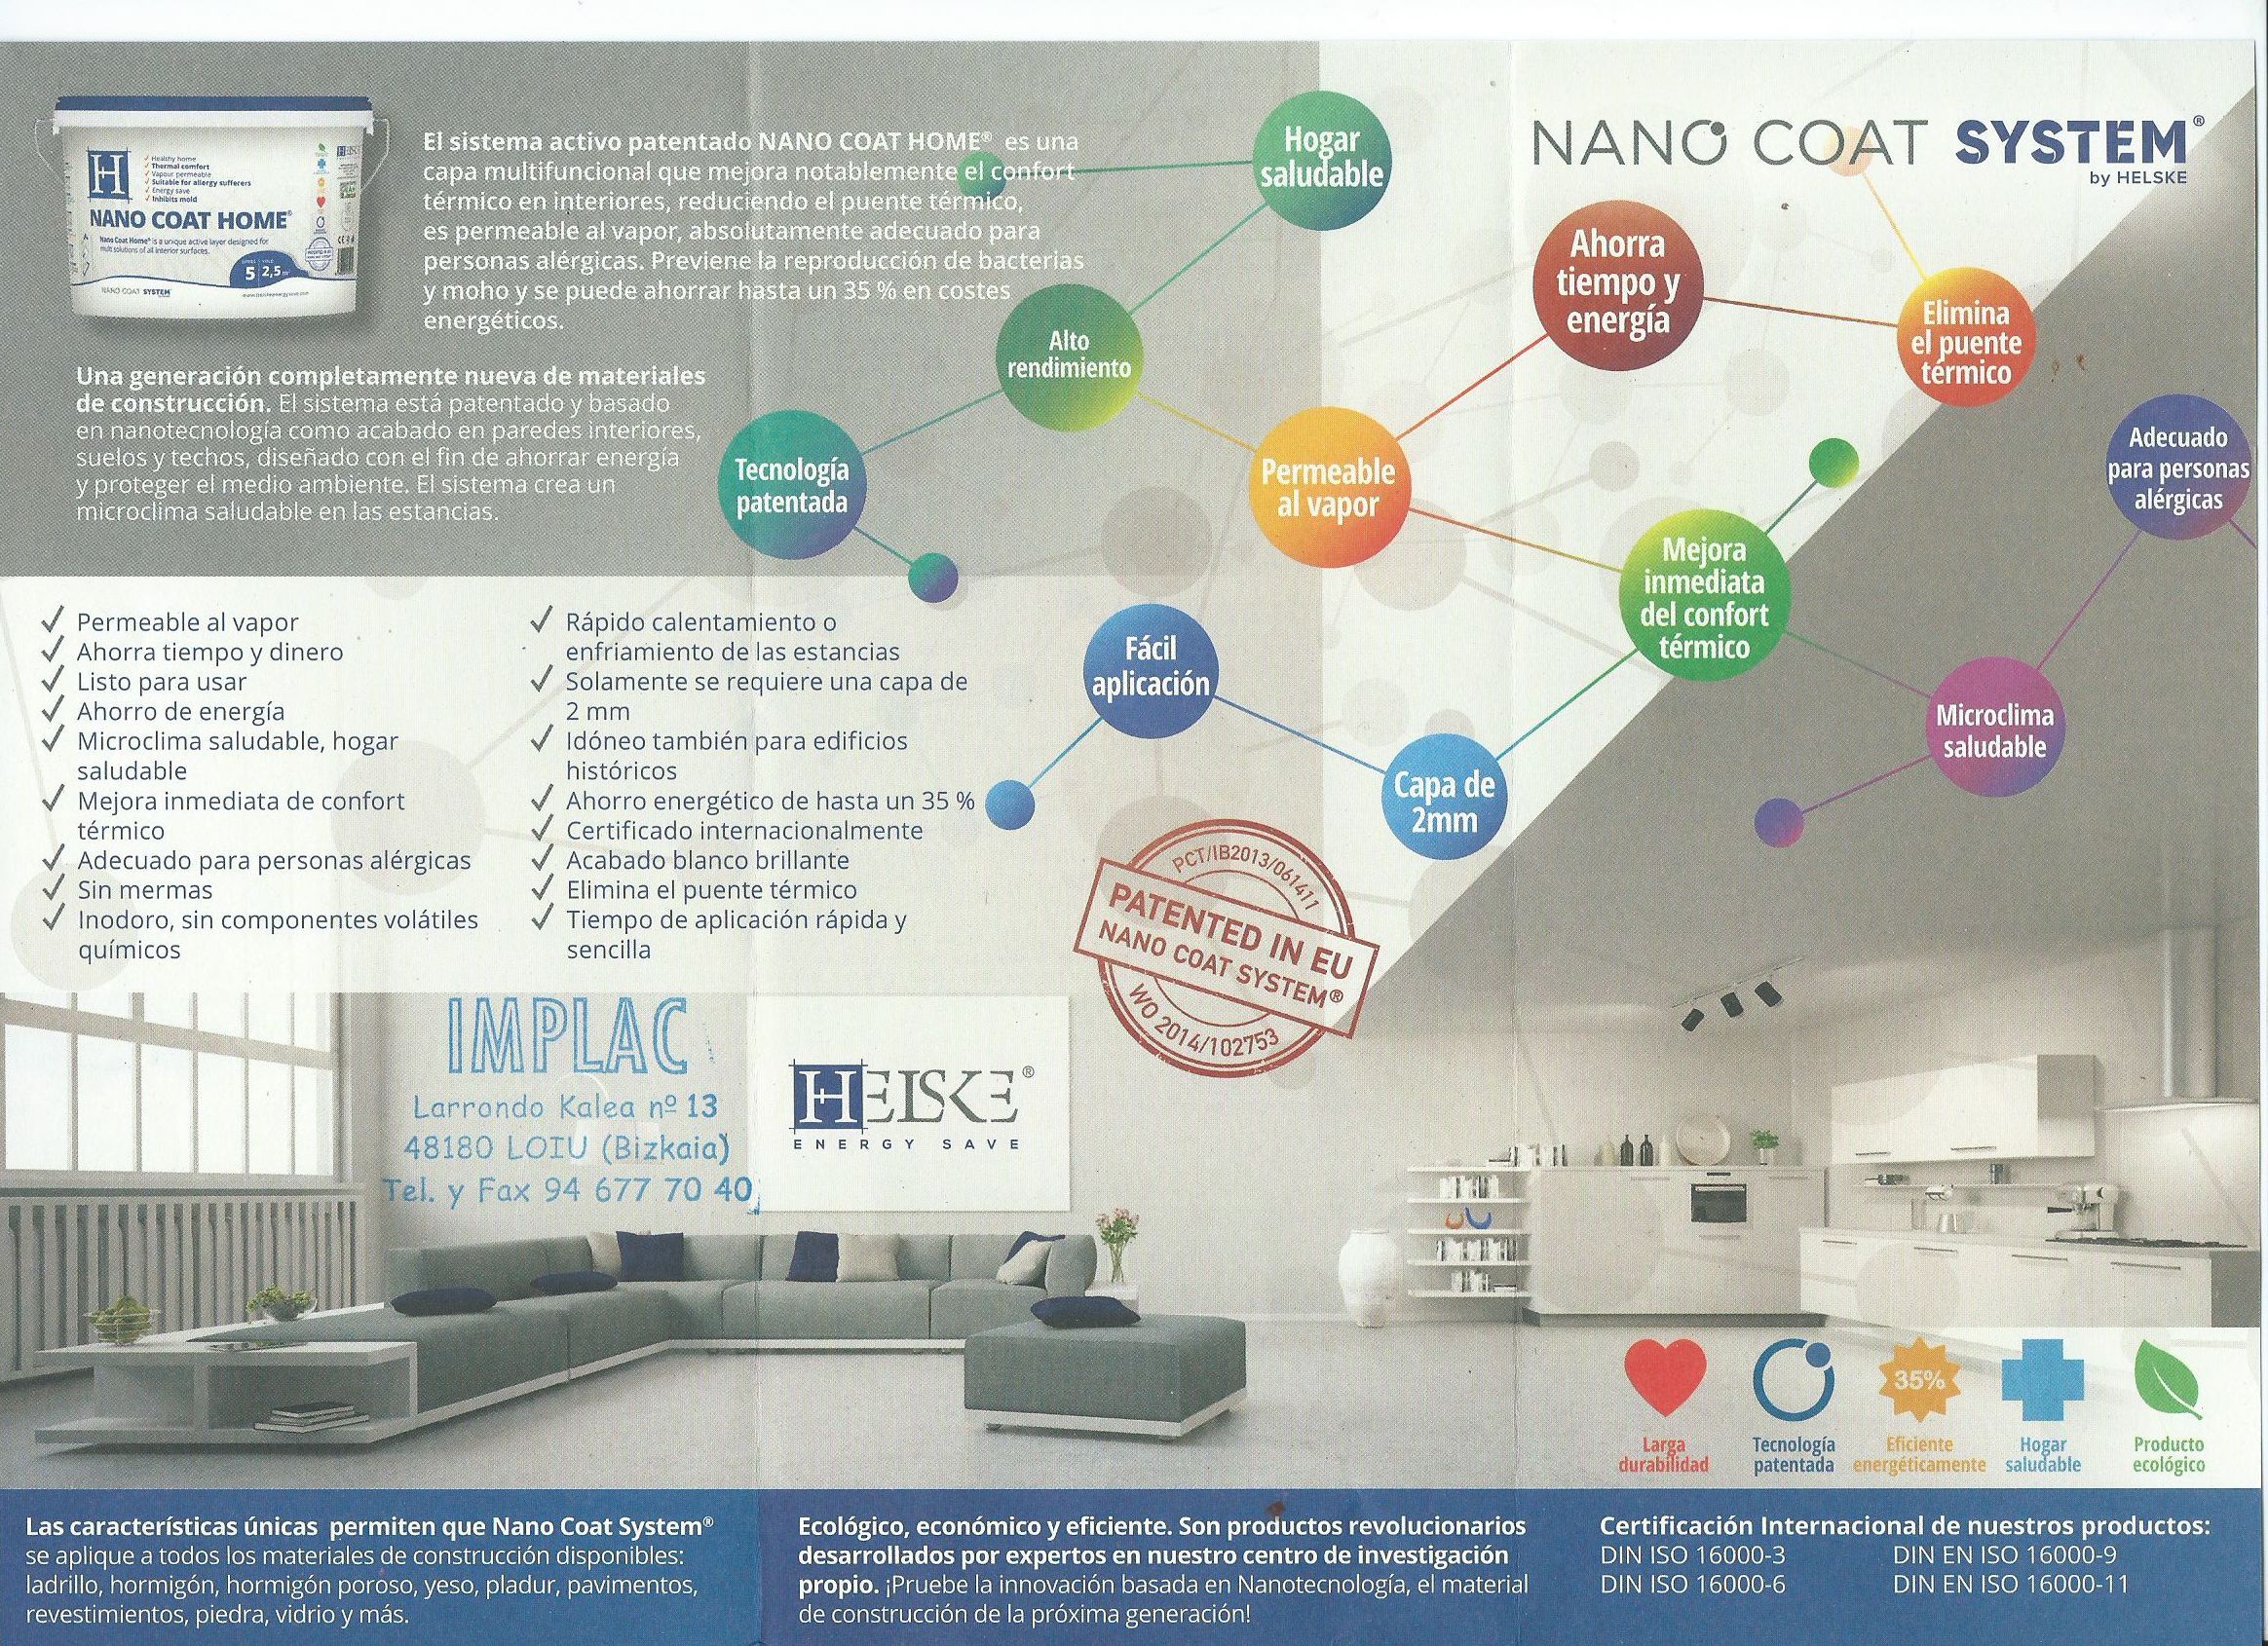 Nano Coat System